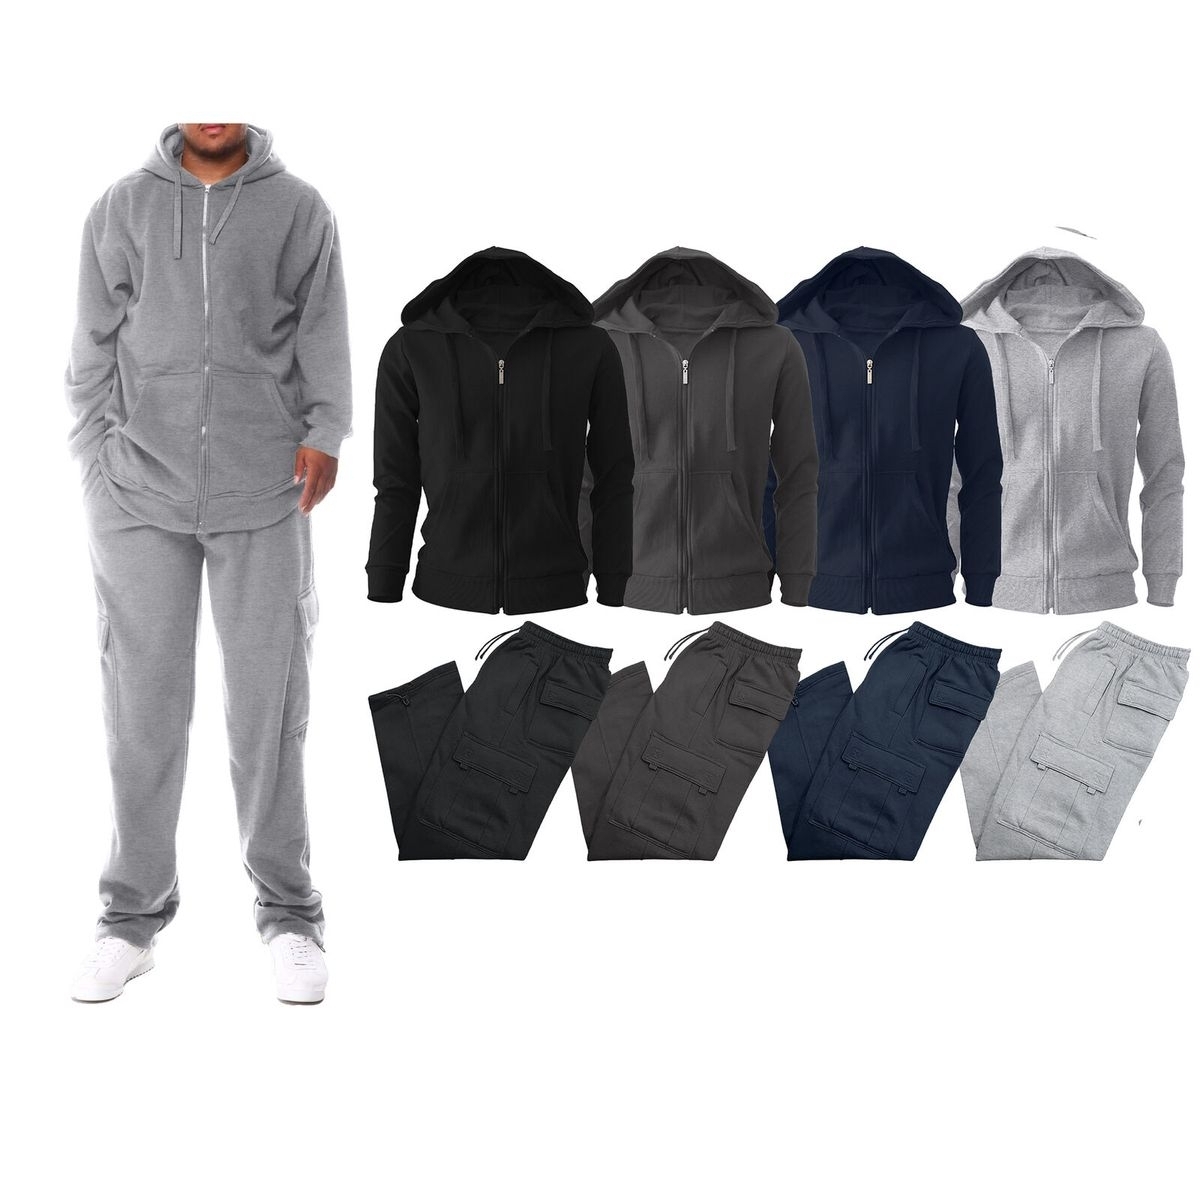 Men's Big & Tall Winter Warm Athletic Active Cozy Fleece Lined Multi-Pocket Full Zip Up Cargo Tracksuit - Grey, Medium